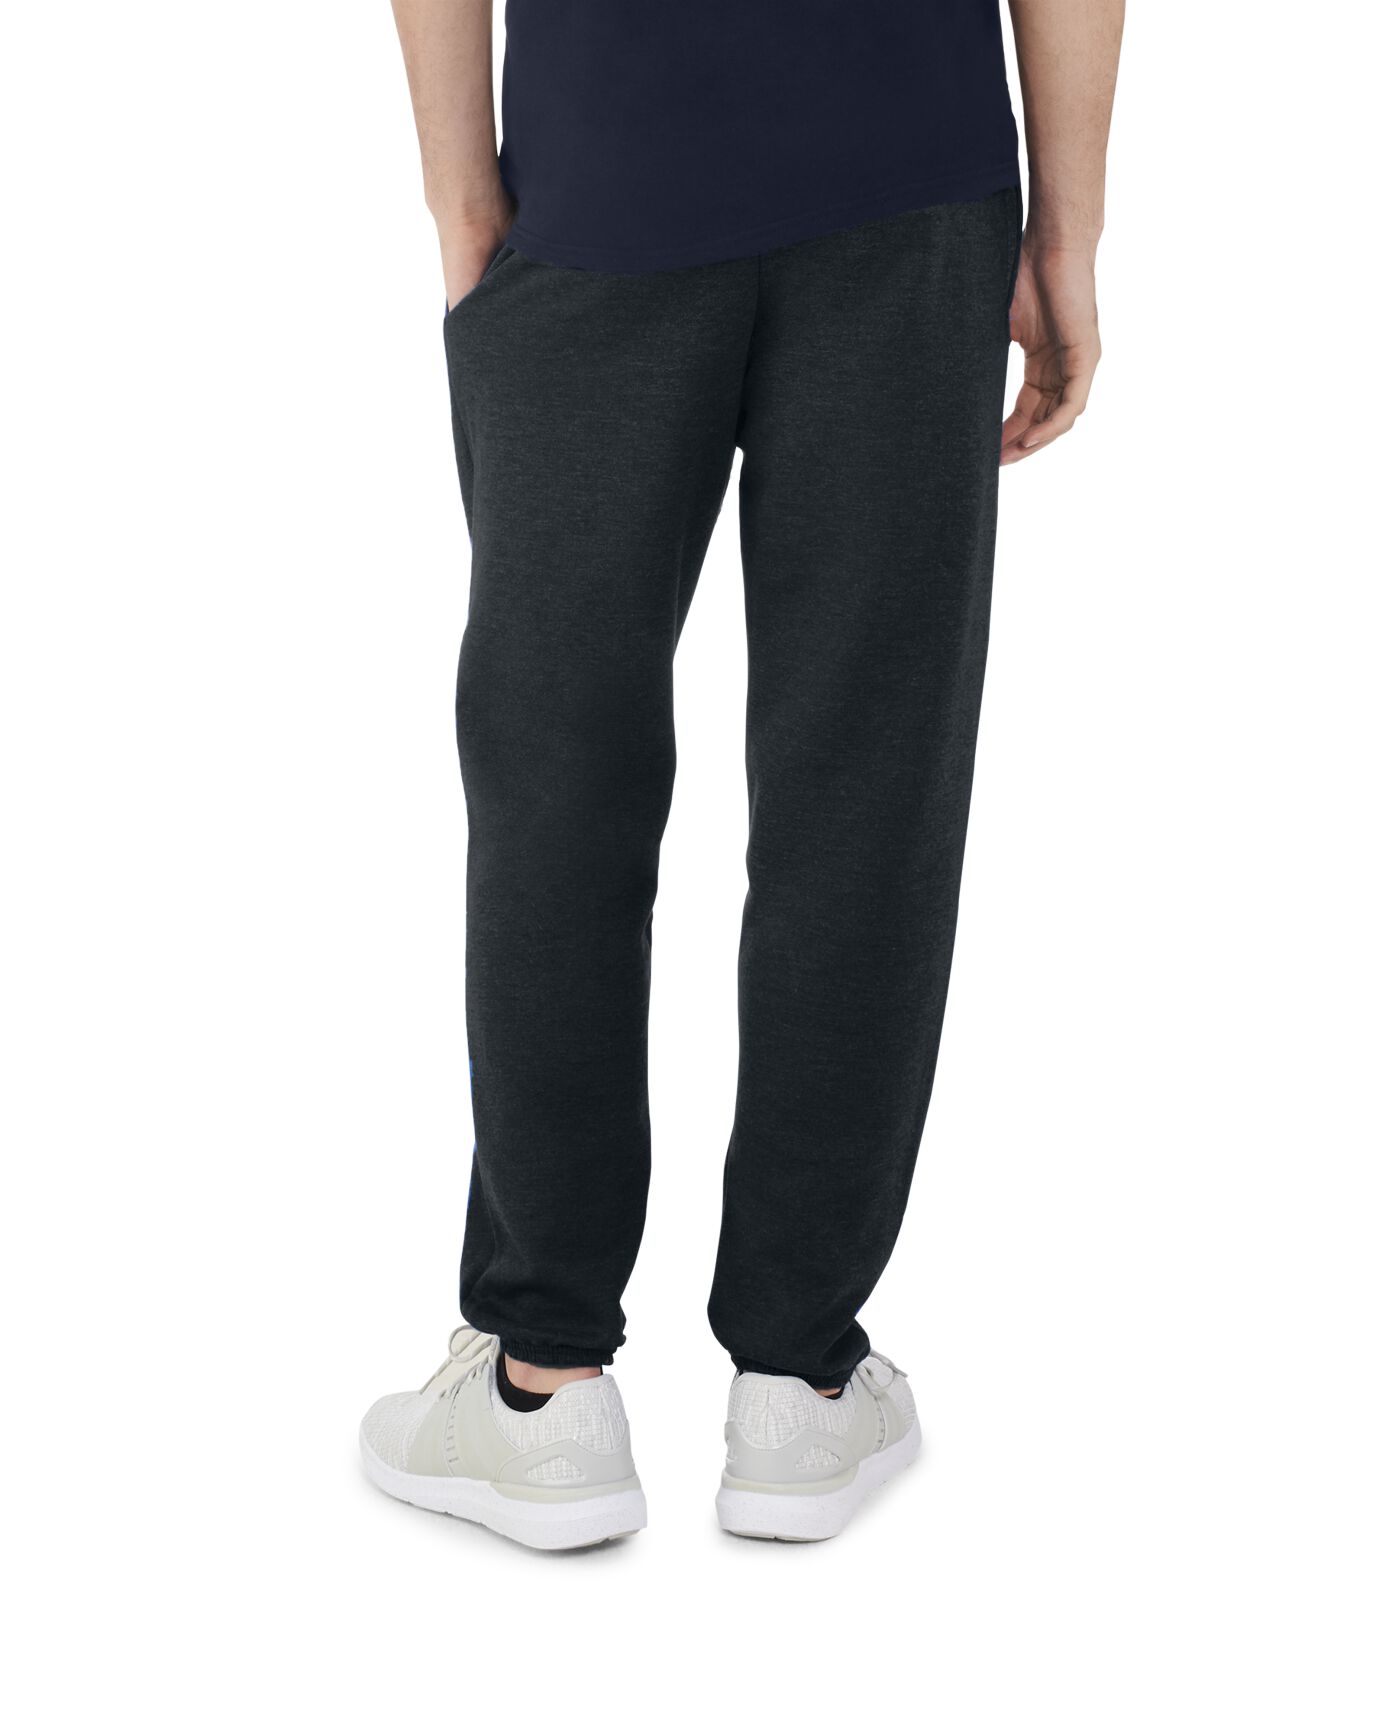 Men's EverSoft Fleece Elastic Bottom Sweatpants, Extended Sizes, 1 Pack